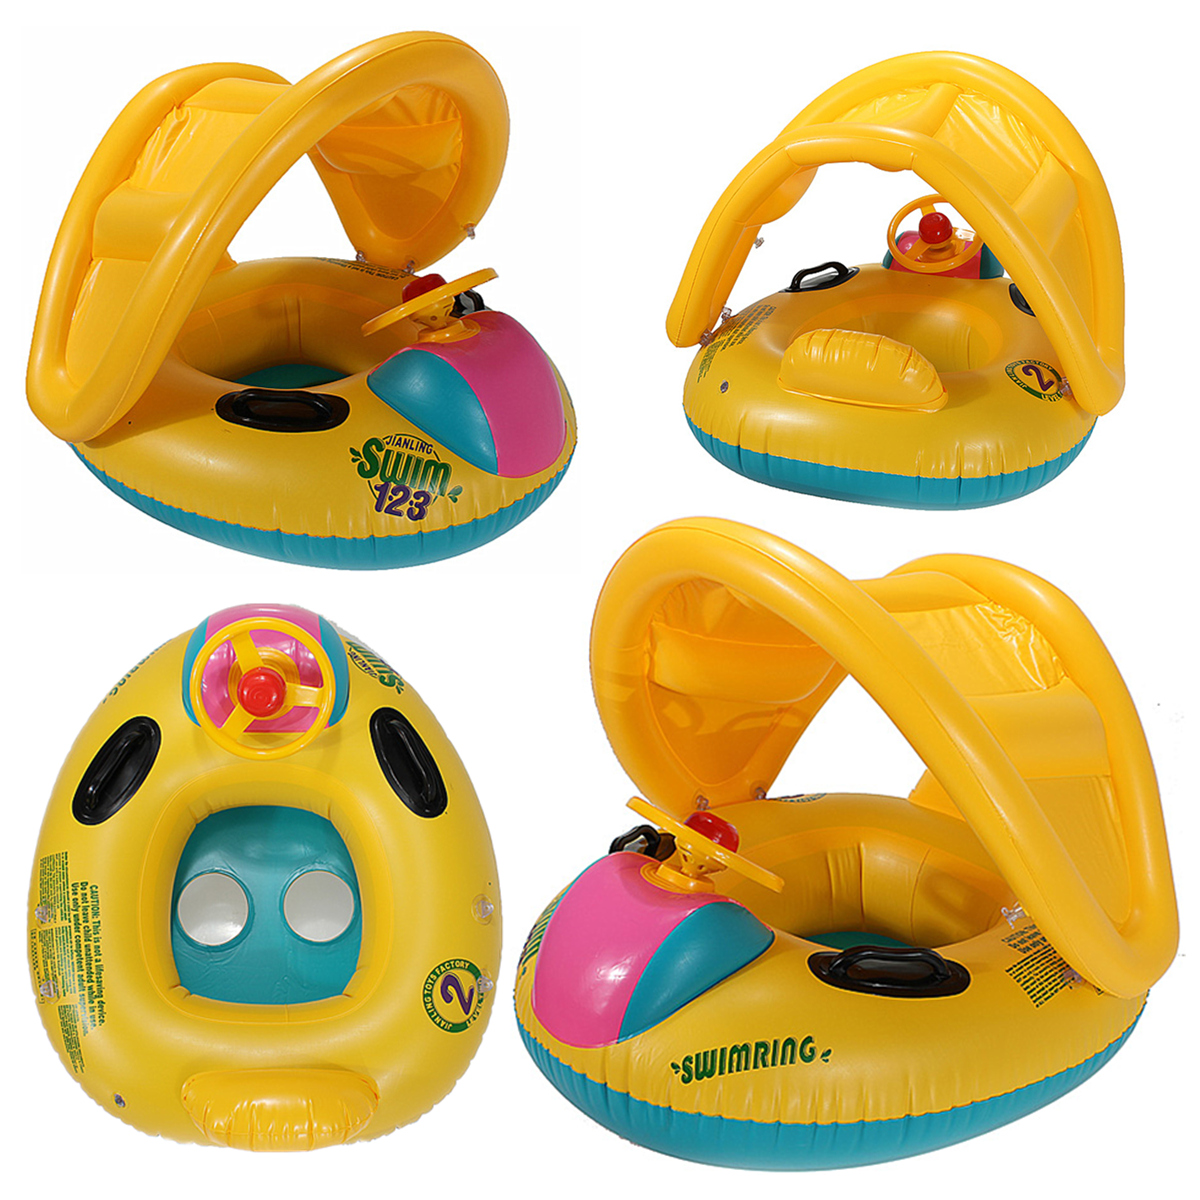 Adjustable-Sunshade-Baby-Swim-Inflatable-Float-Seat-Boat-Swimming-Ring-52291-5